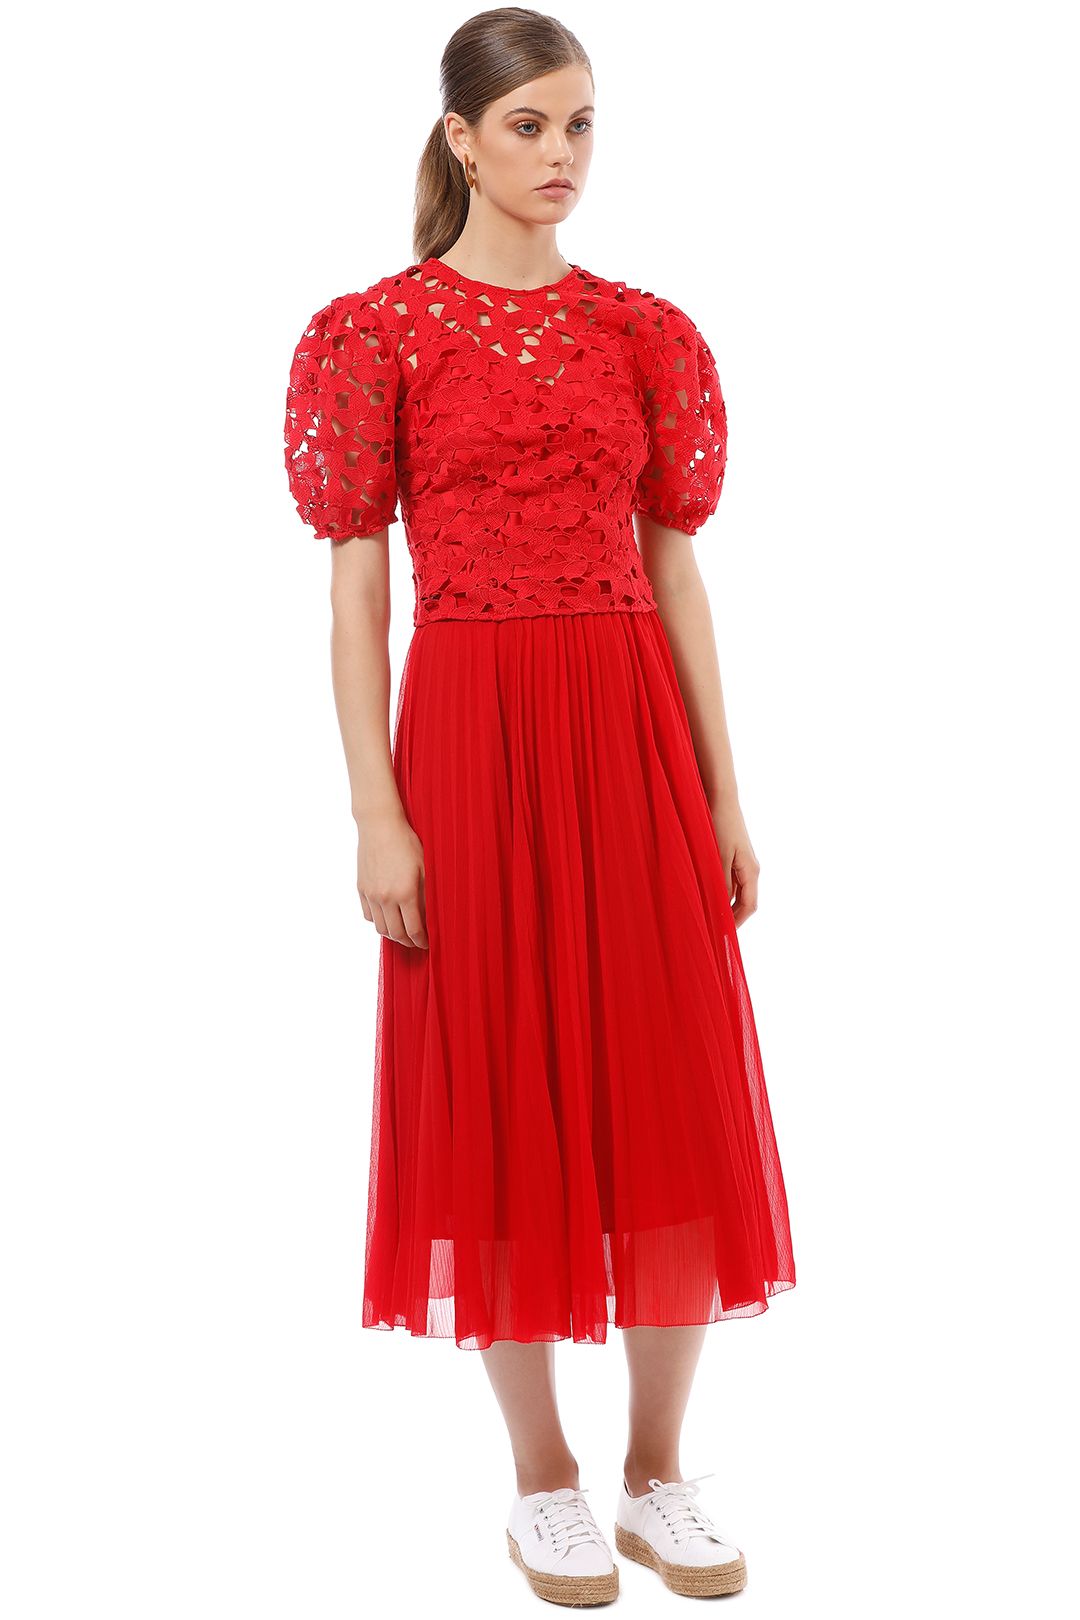 Saba - Cicely Midi Skirt - Red - Side